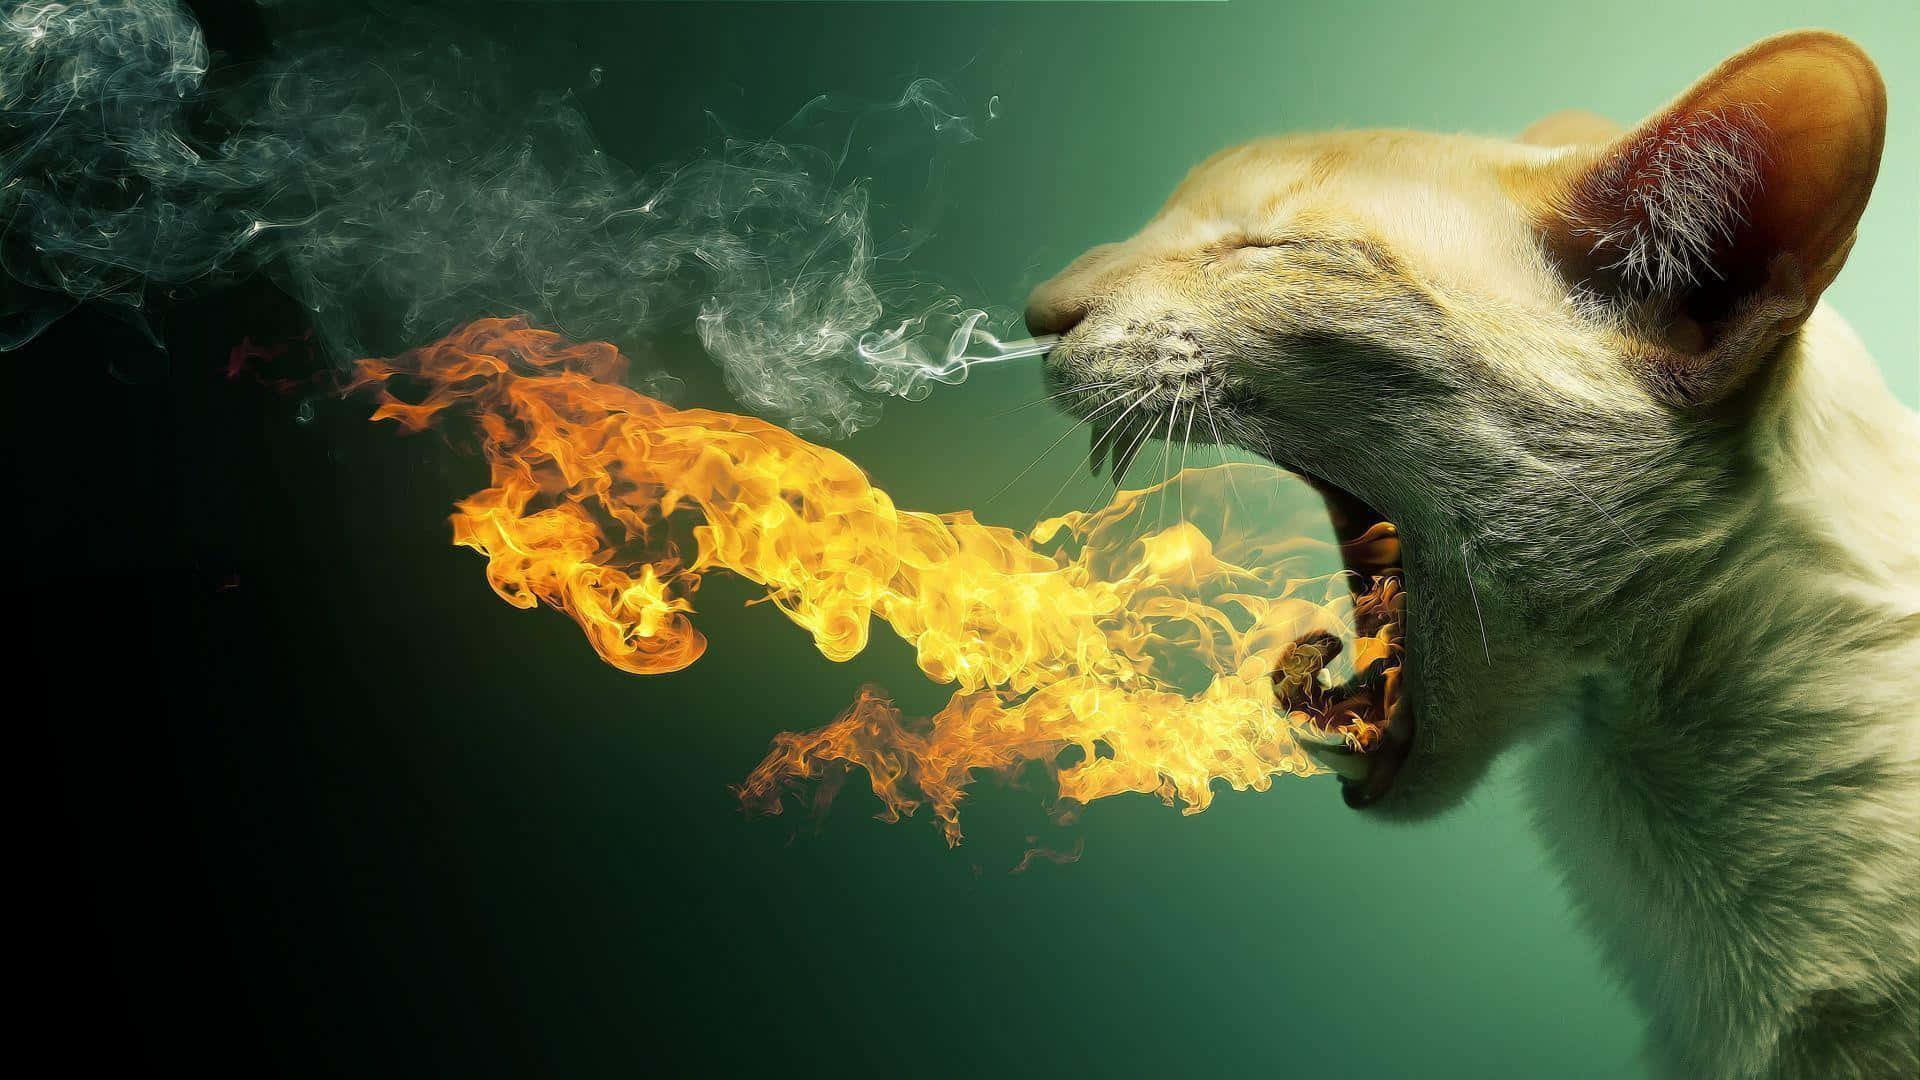 Super Funny Cat Fire Picture